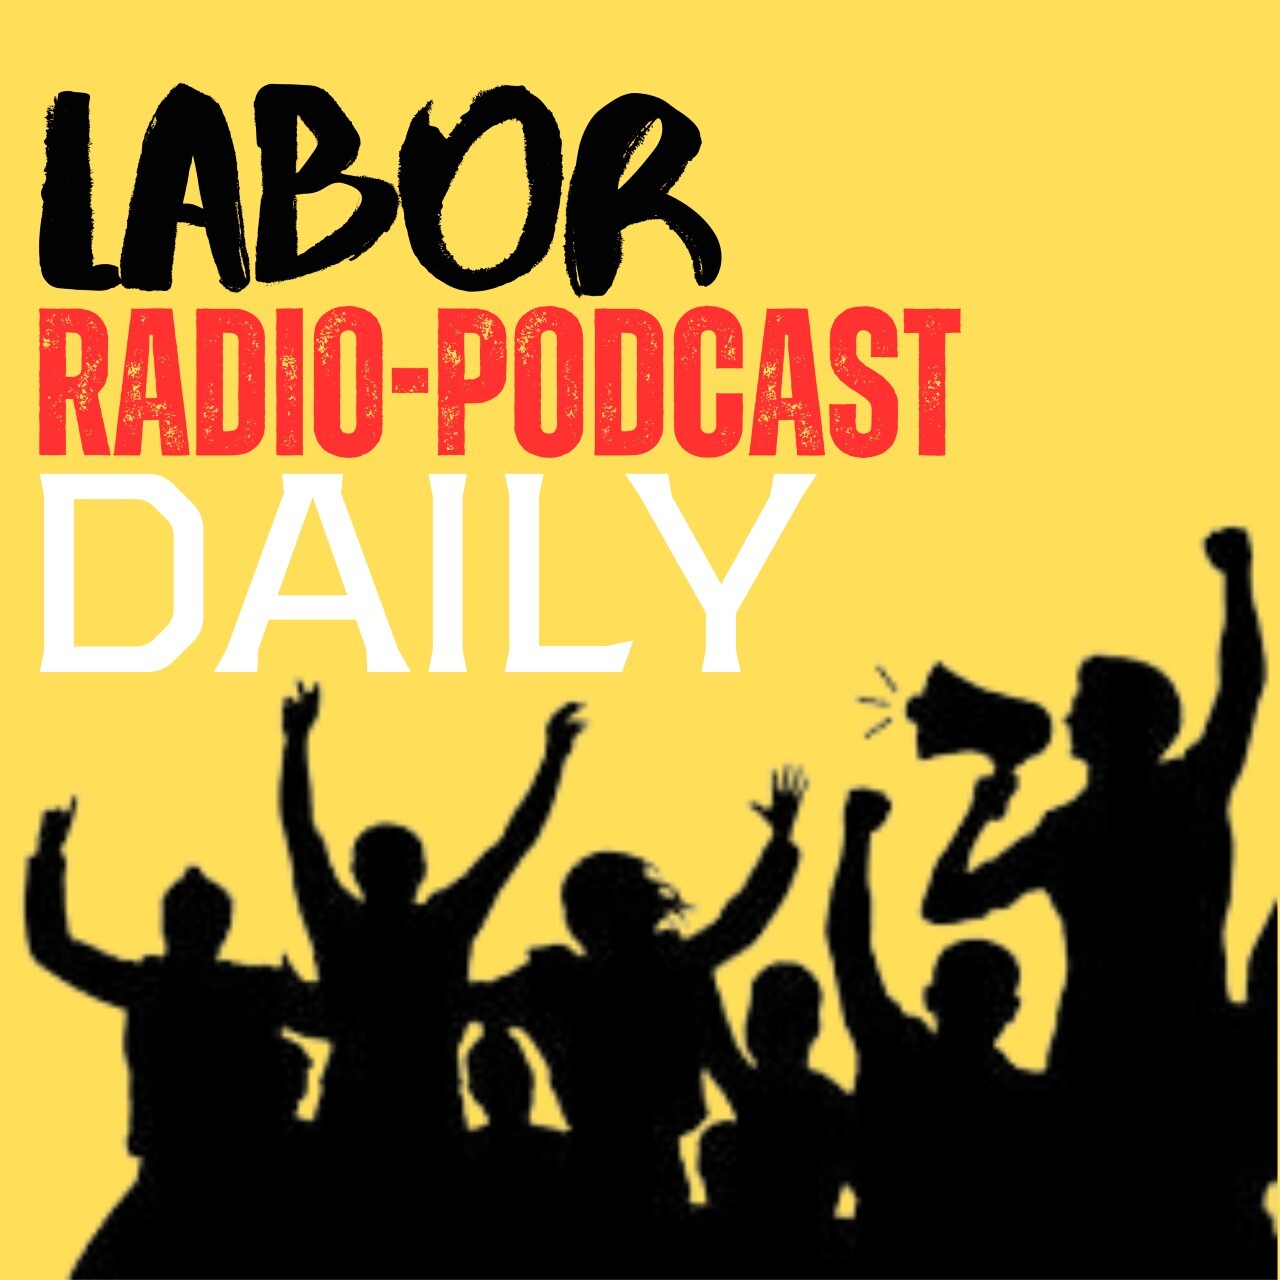 202404502_Labor-Radio-Podcast-DAILY-logob3lj3...